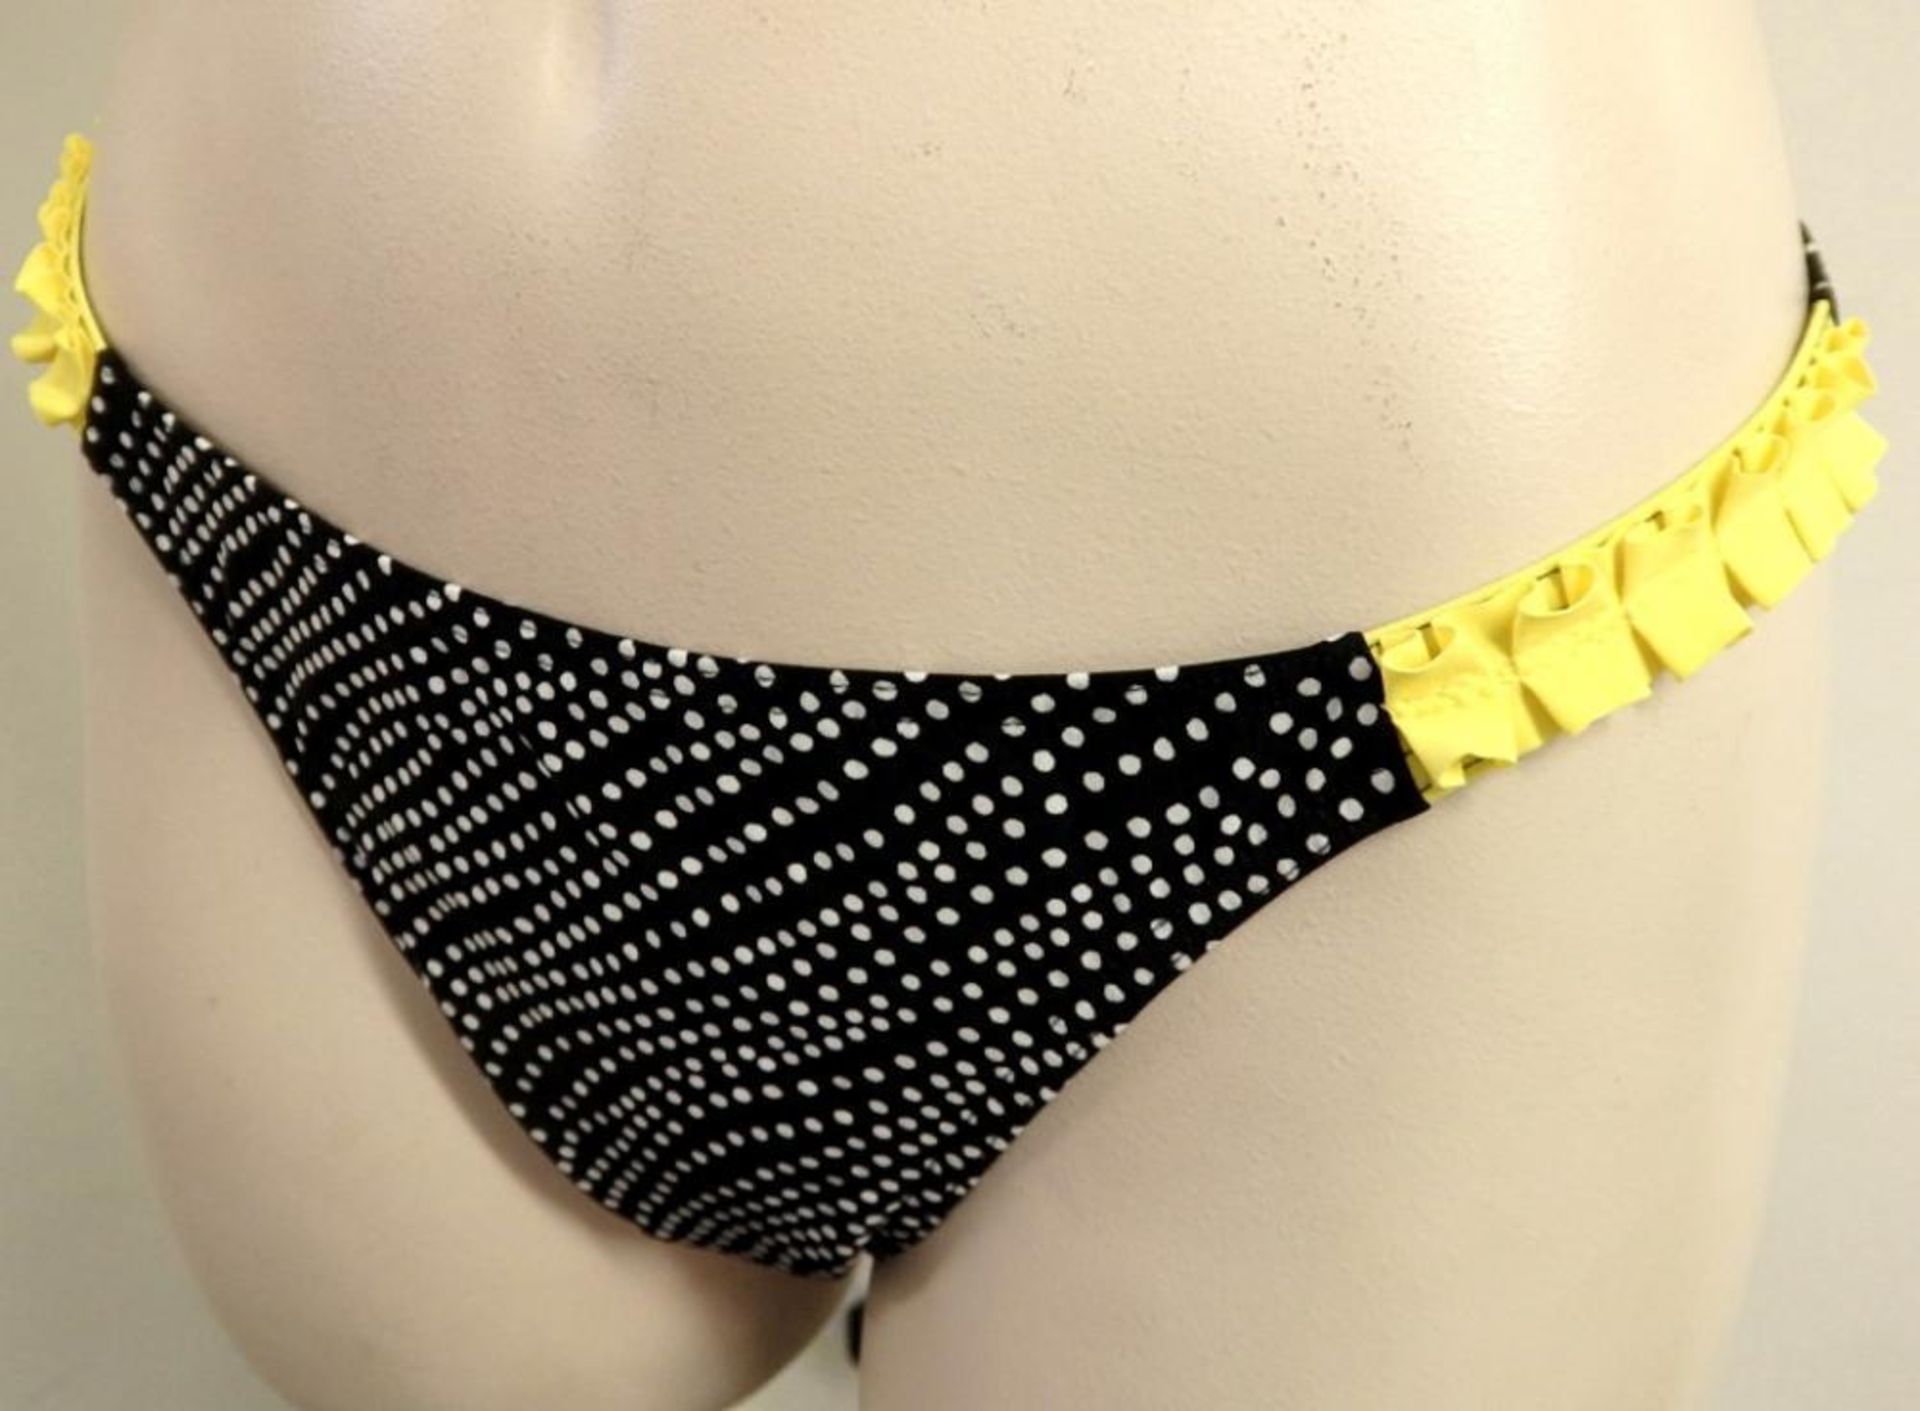 1 x Rasurel - Black Polka dot and Yellow Frill Gold Bikini - R21061 Touquet -Shorty - Size 2 - UK 32 - Image 9 of 9